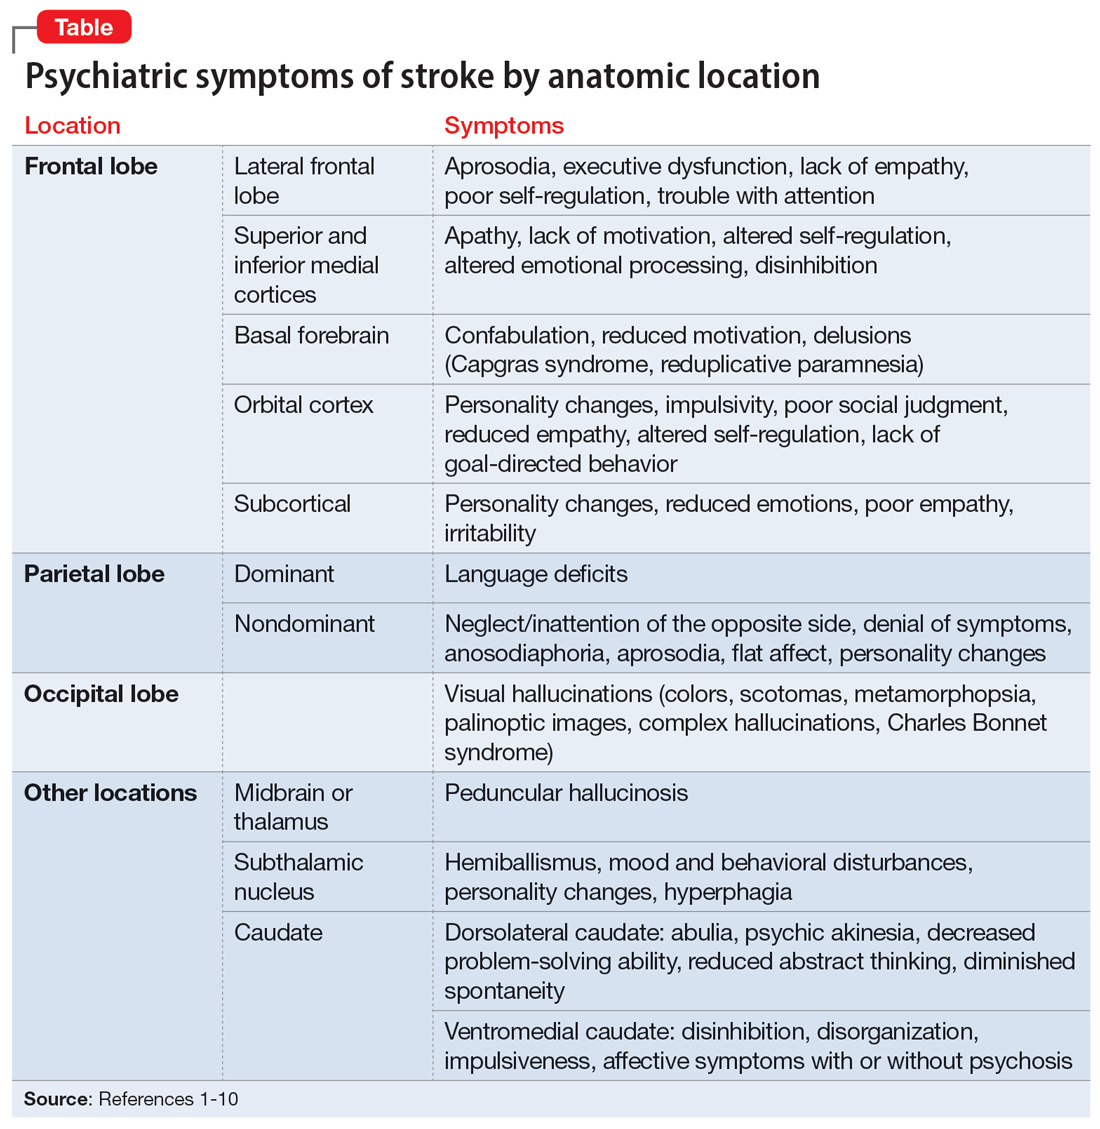 Psychiatric symptoms of stroke by anatomic location